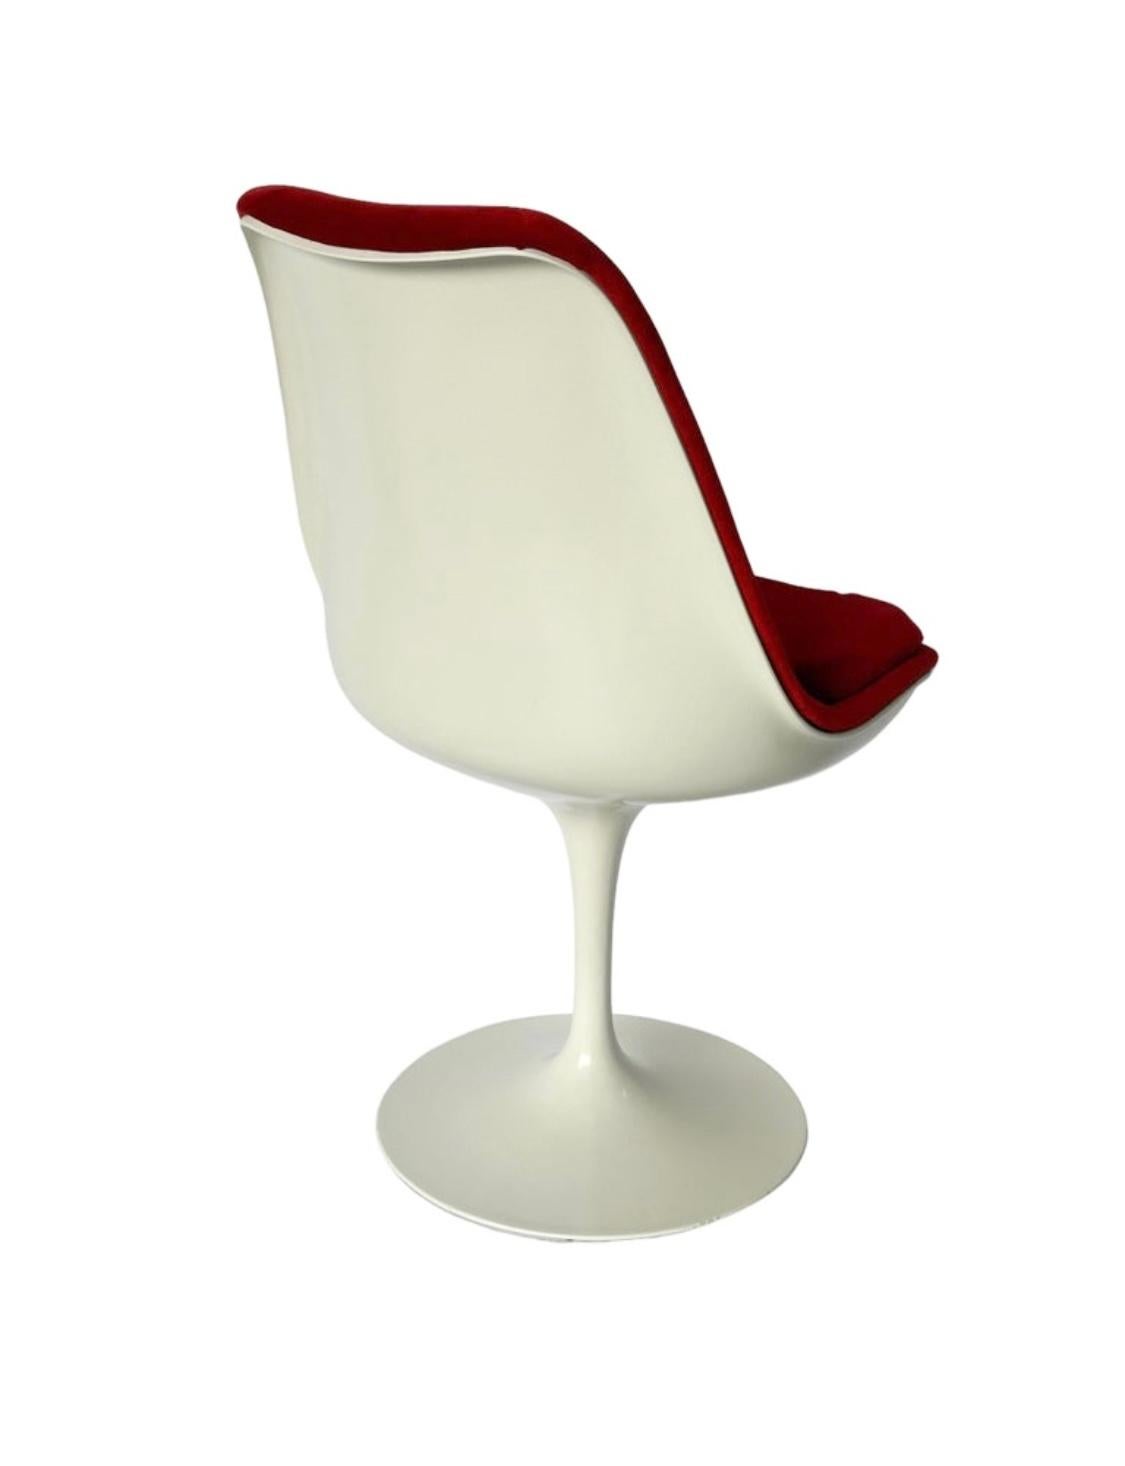 Mid-Century Modern Velvet Tulip Side Chair Designed by Eero Saarinen for Knoll